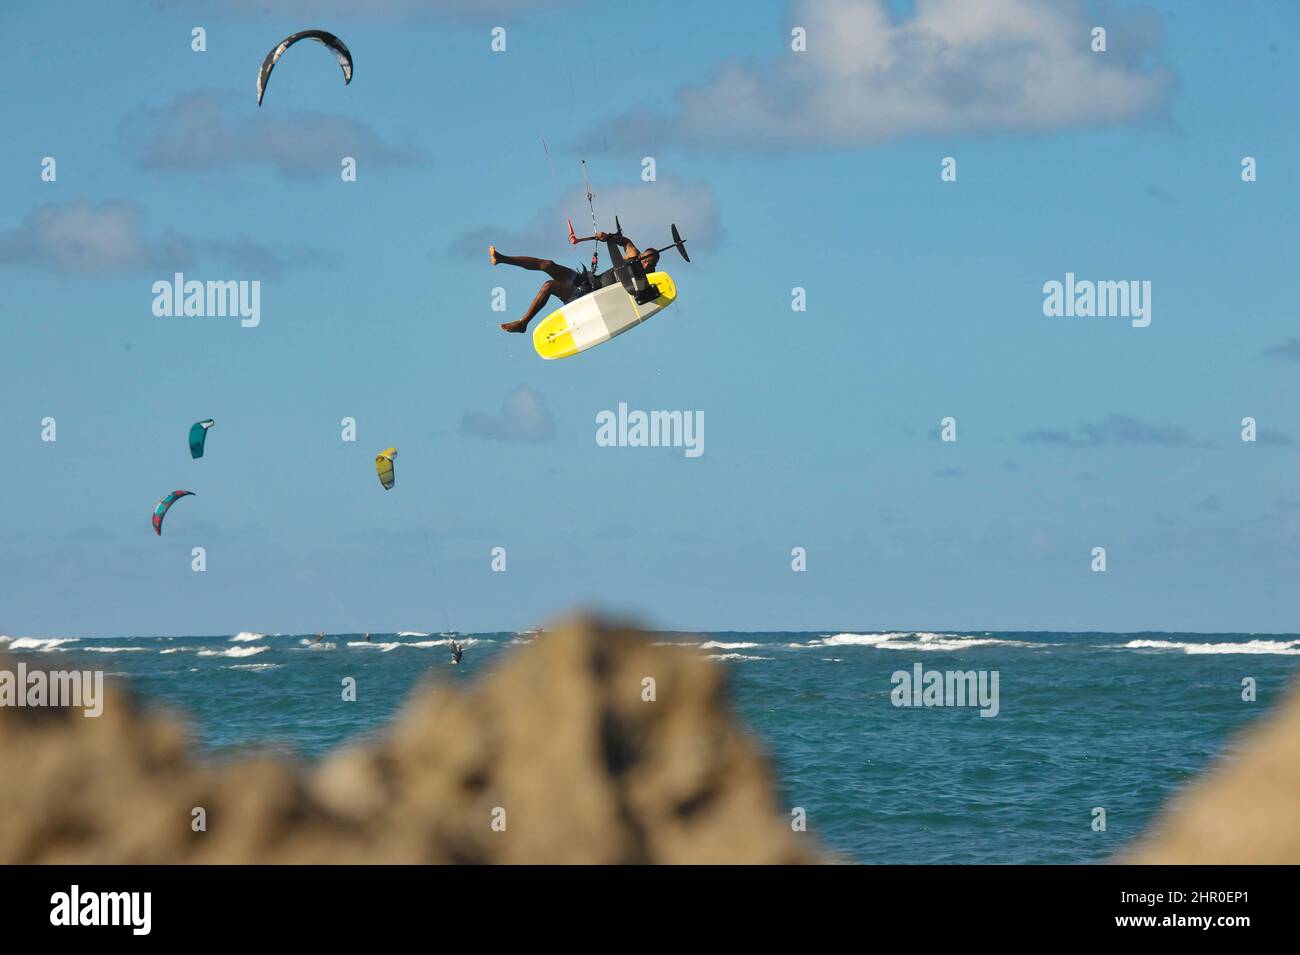 Cabarete, Dominican Republic. Lifestyle based on kitesurfing. Stock Photo